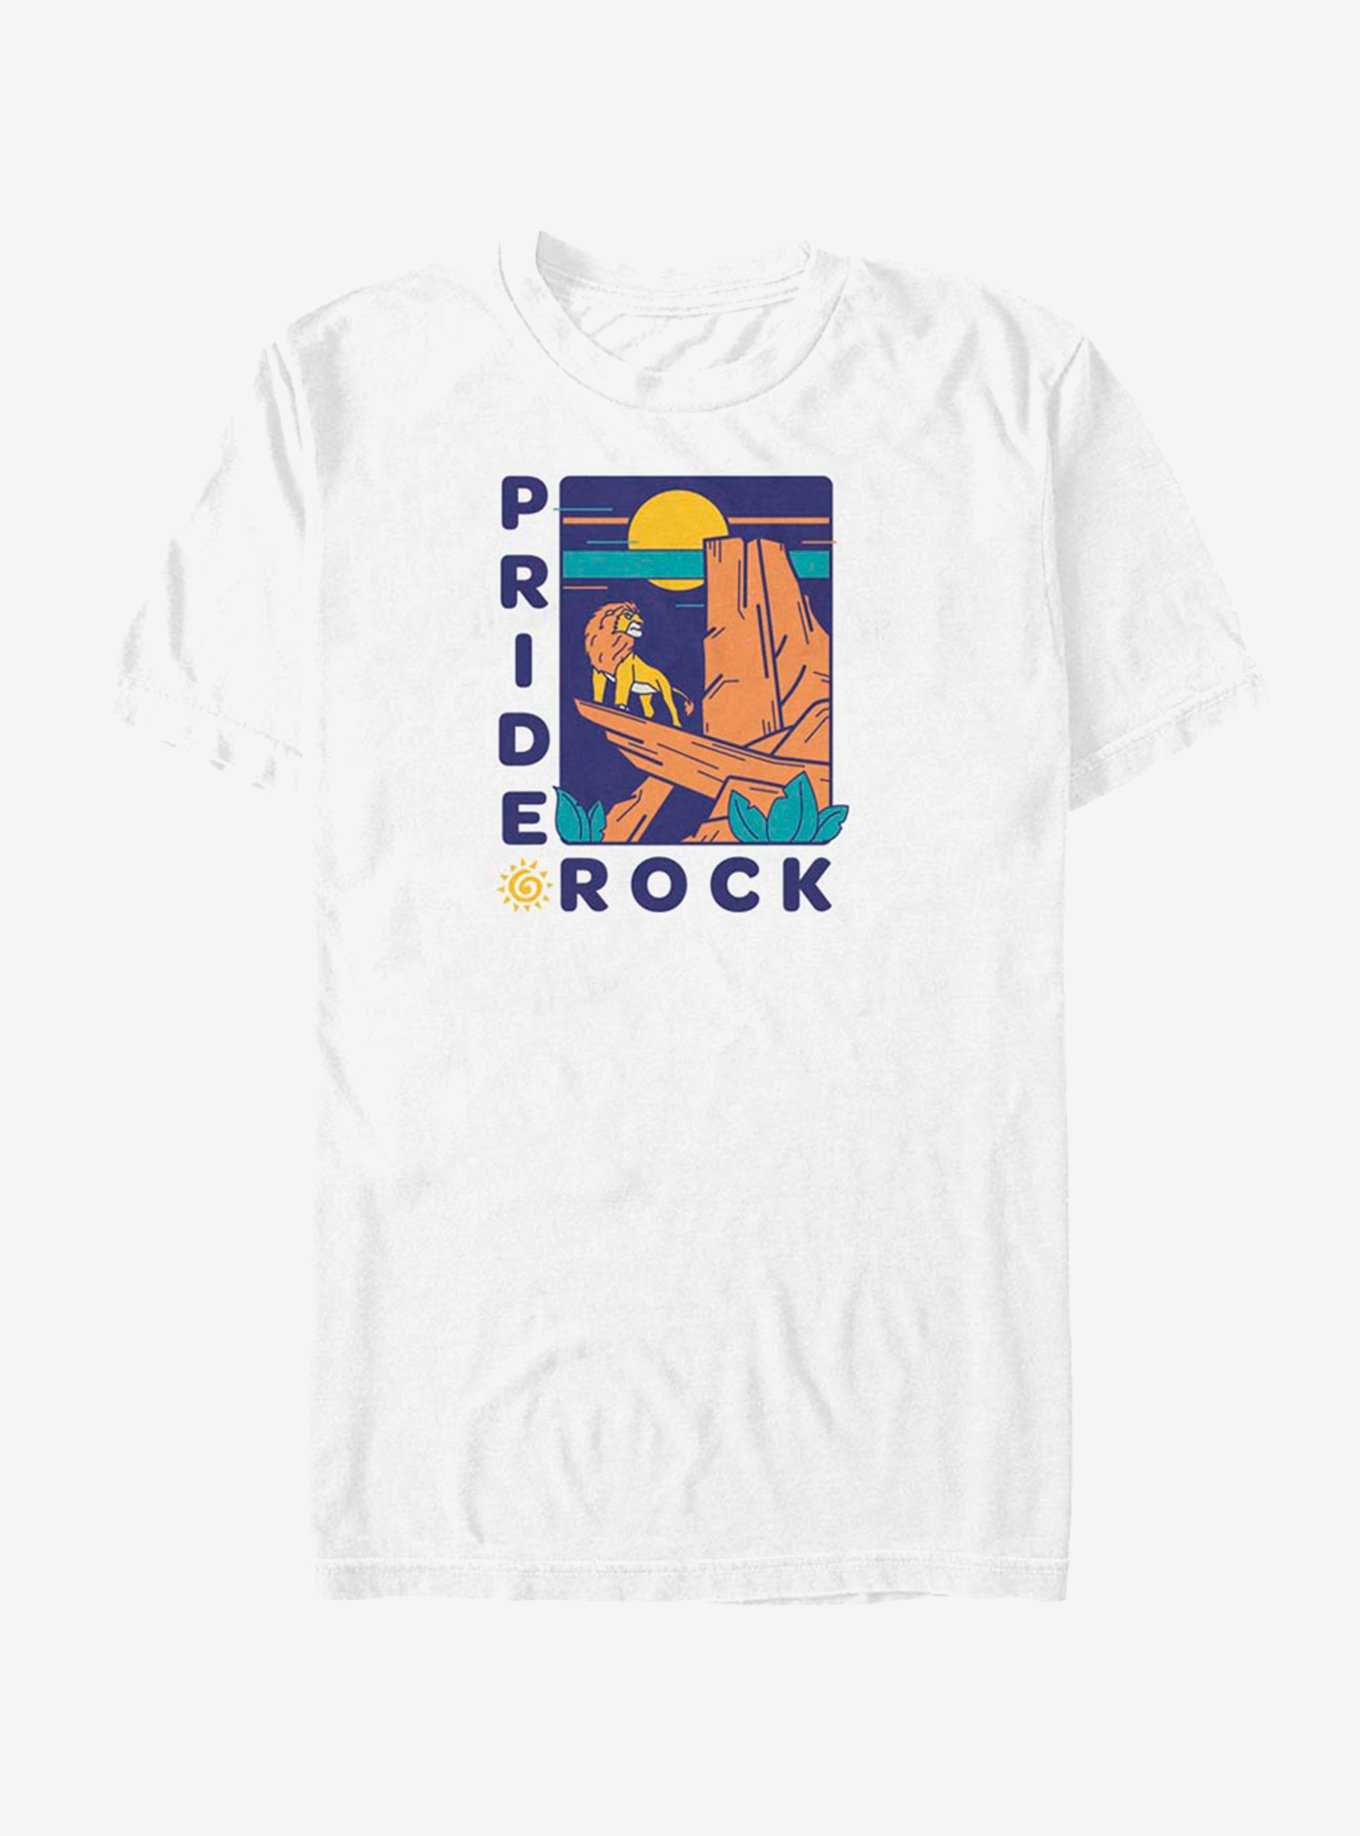 Disney The Lion King Pride Rock Badge T-Shirt, , hi-res